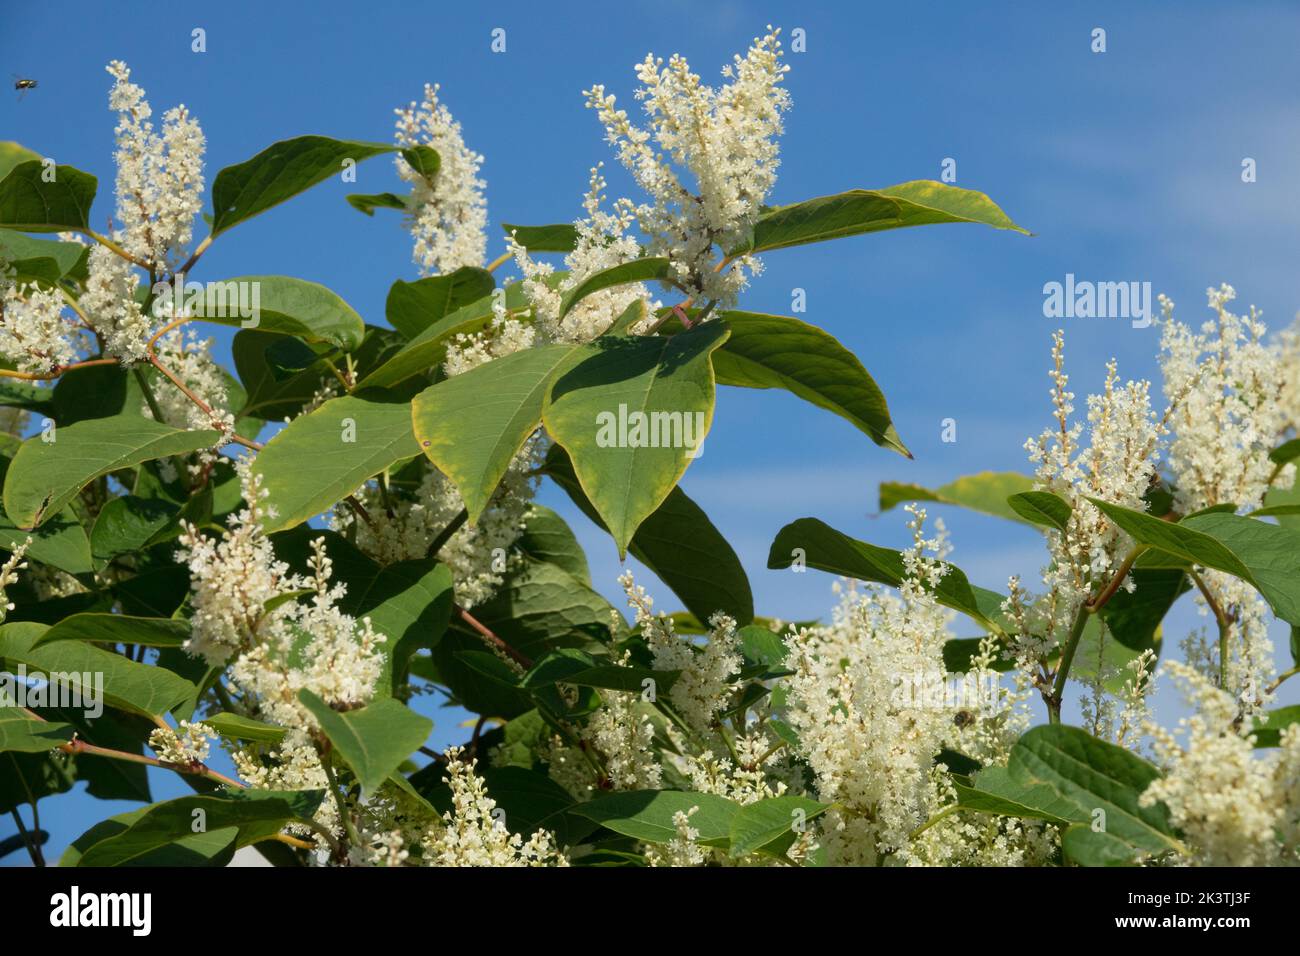 Giapponese Knotweed, Fallopia japonica, Blooming, Reynoutria japonica bei fiori ma dura pianta invasiva Foto Stock